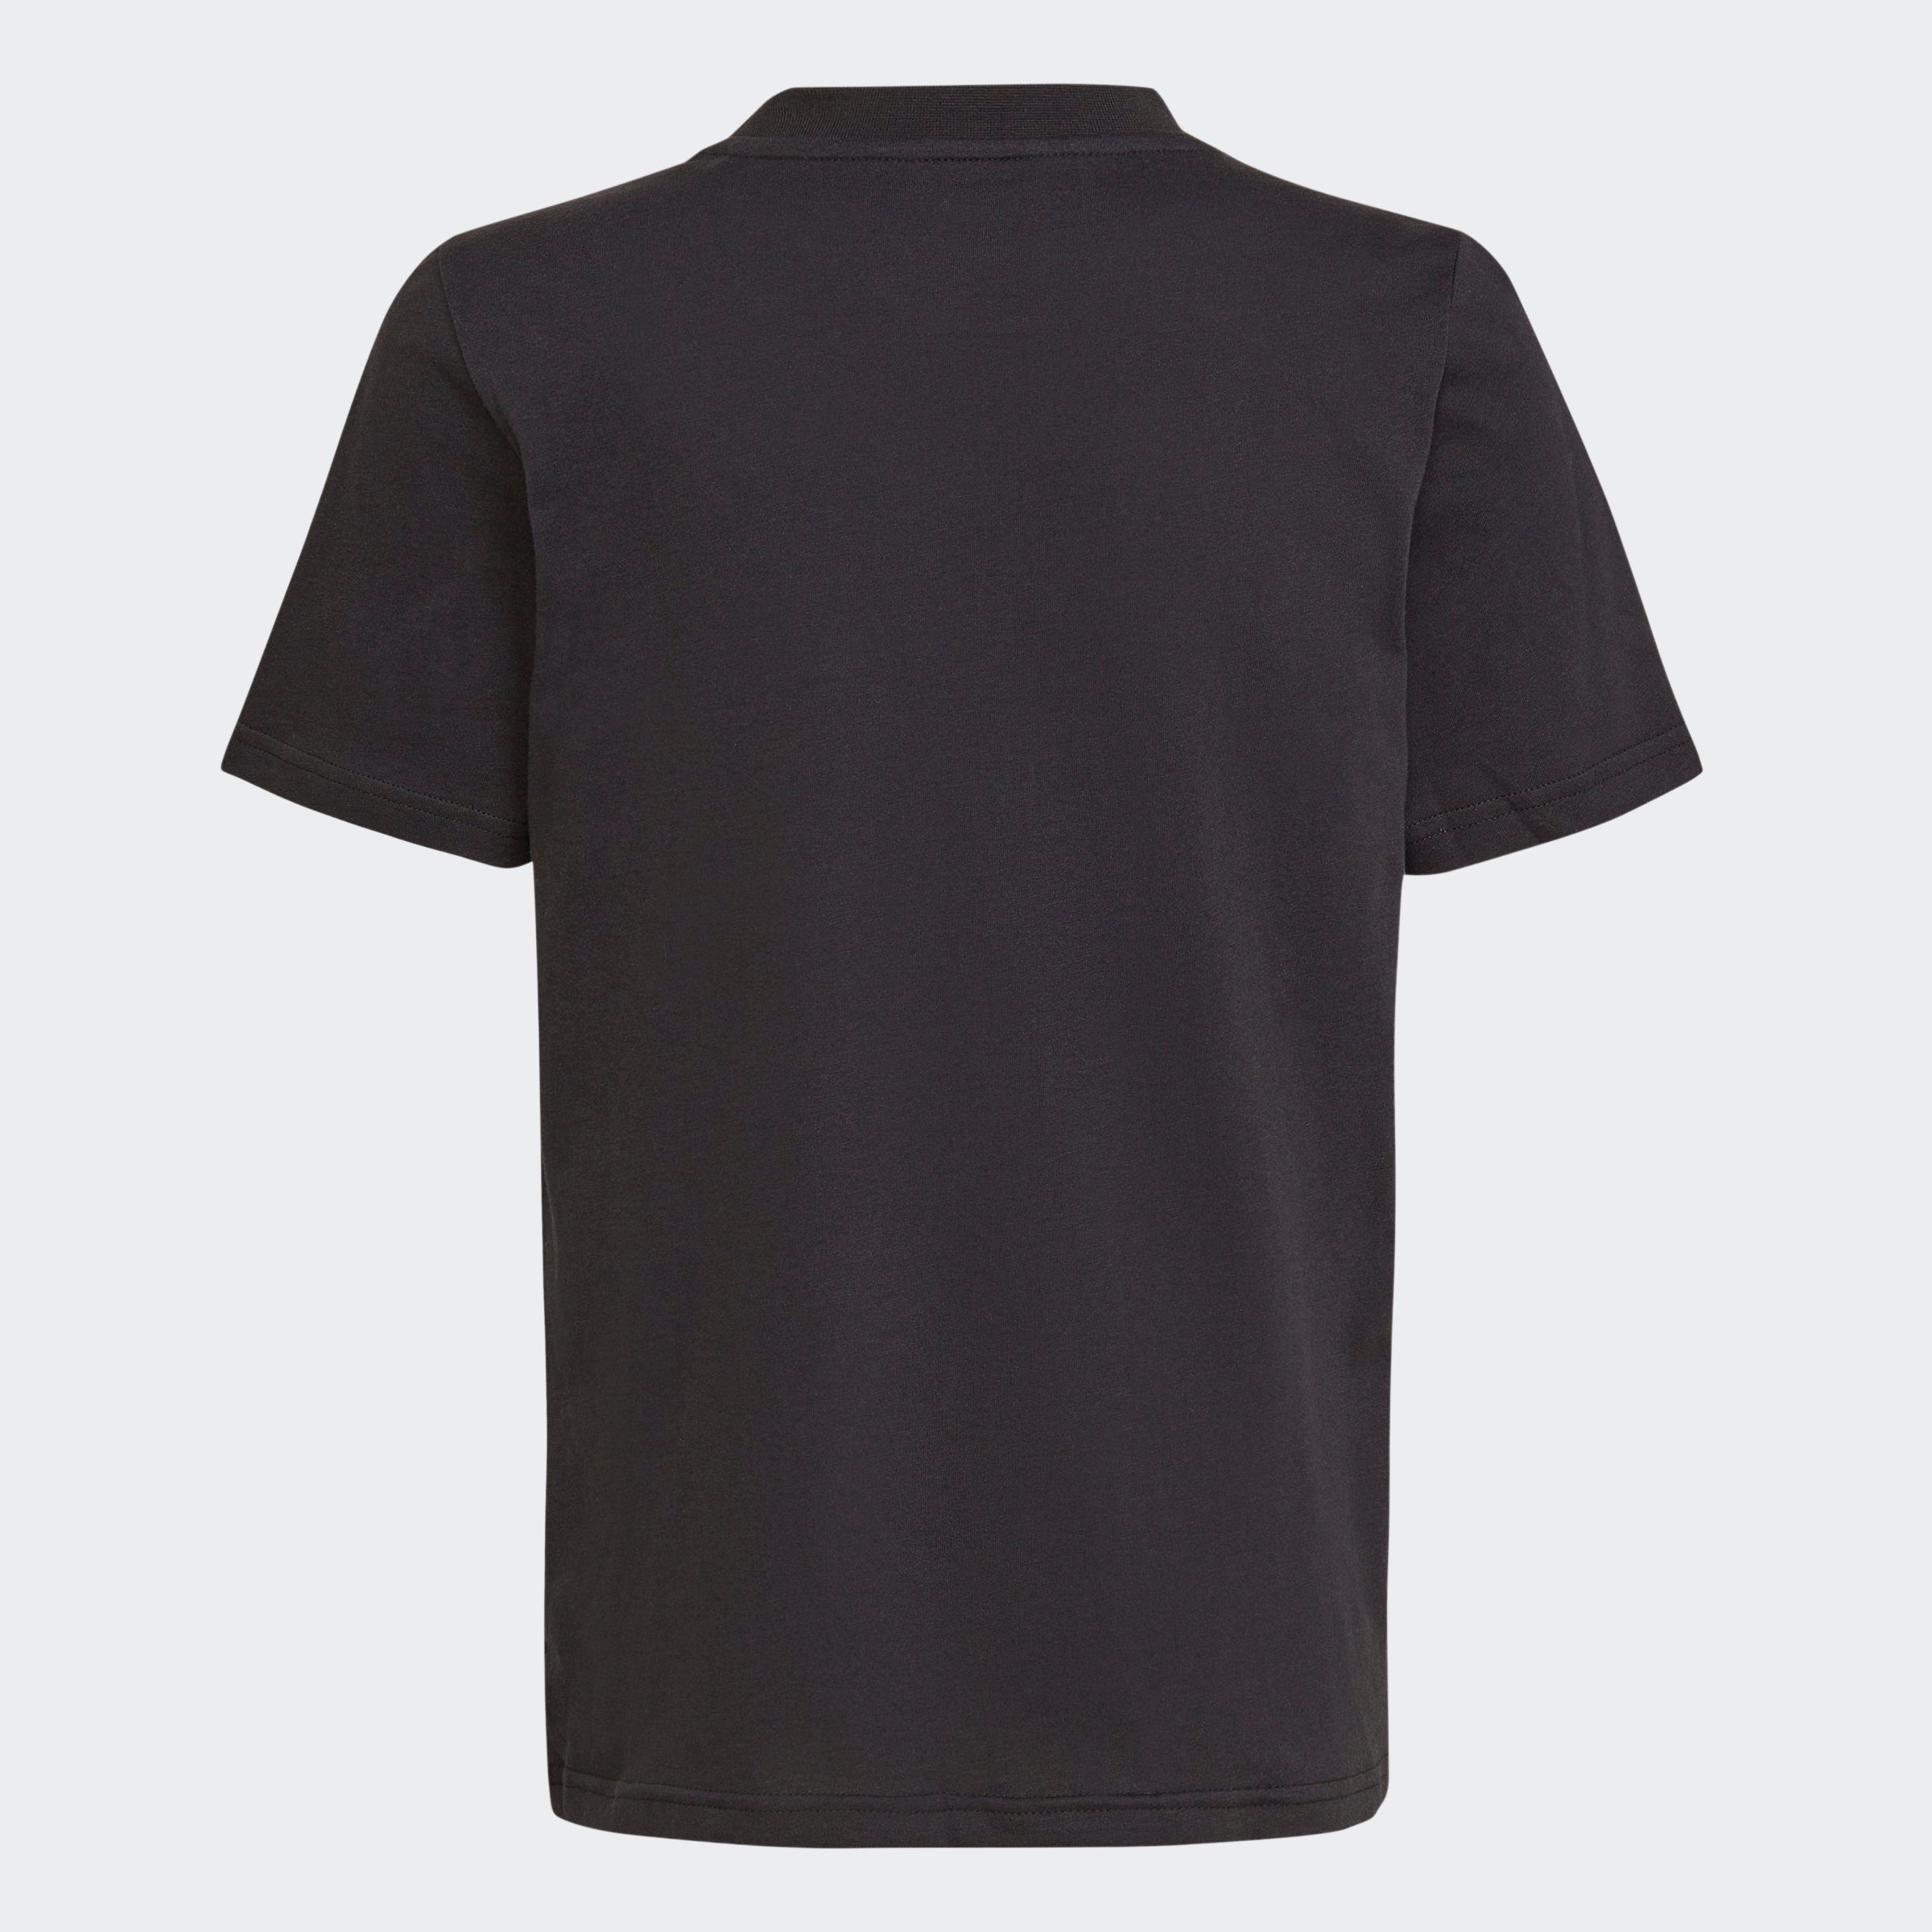 Originals Black T-Shirt TEE adidas